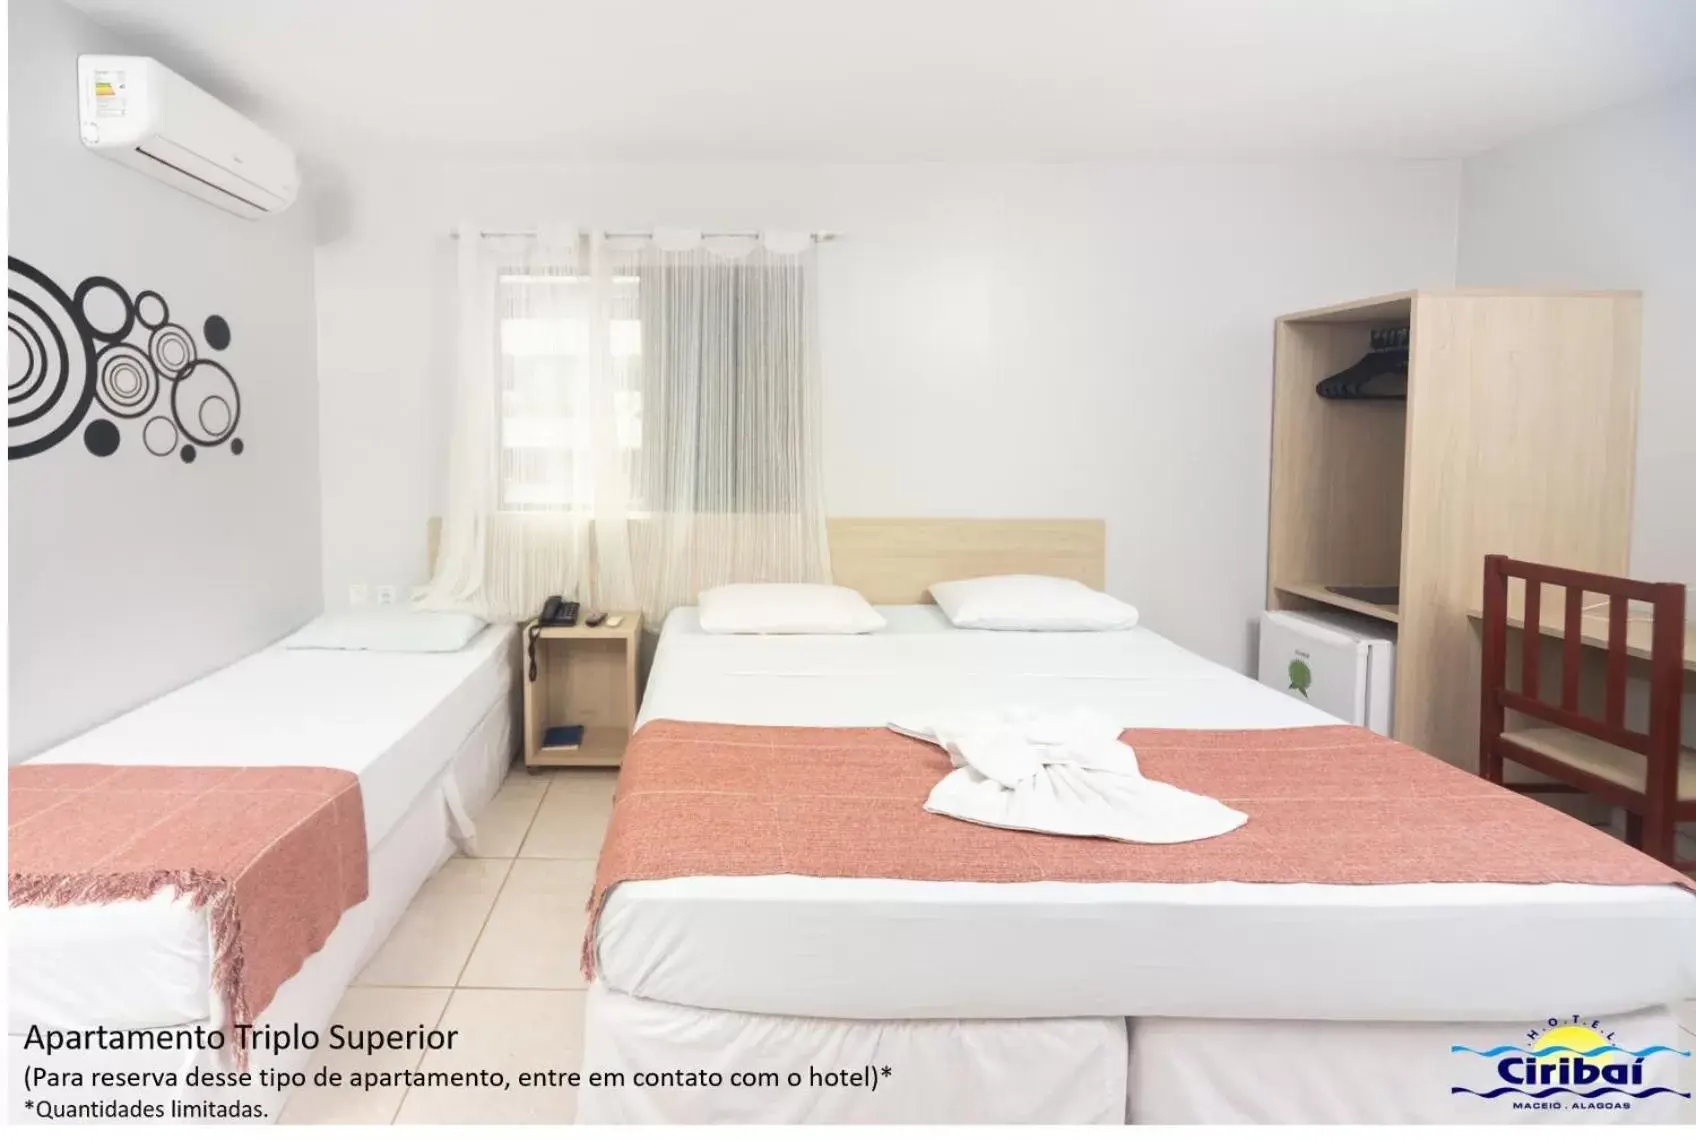 Bed in Hotel Ciribaí